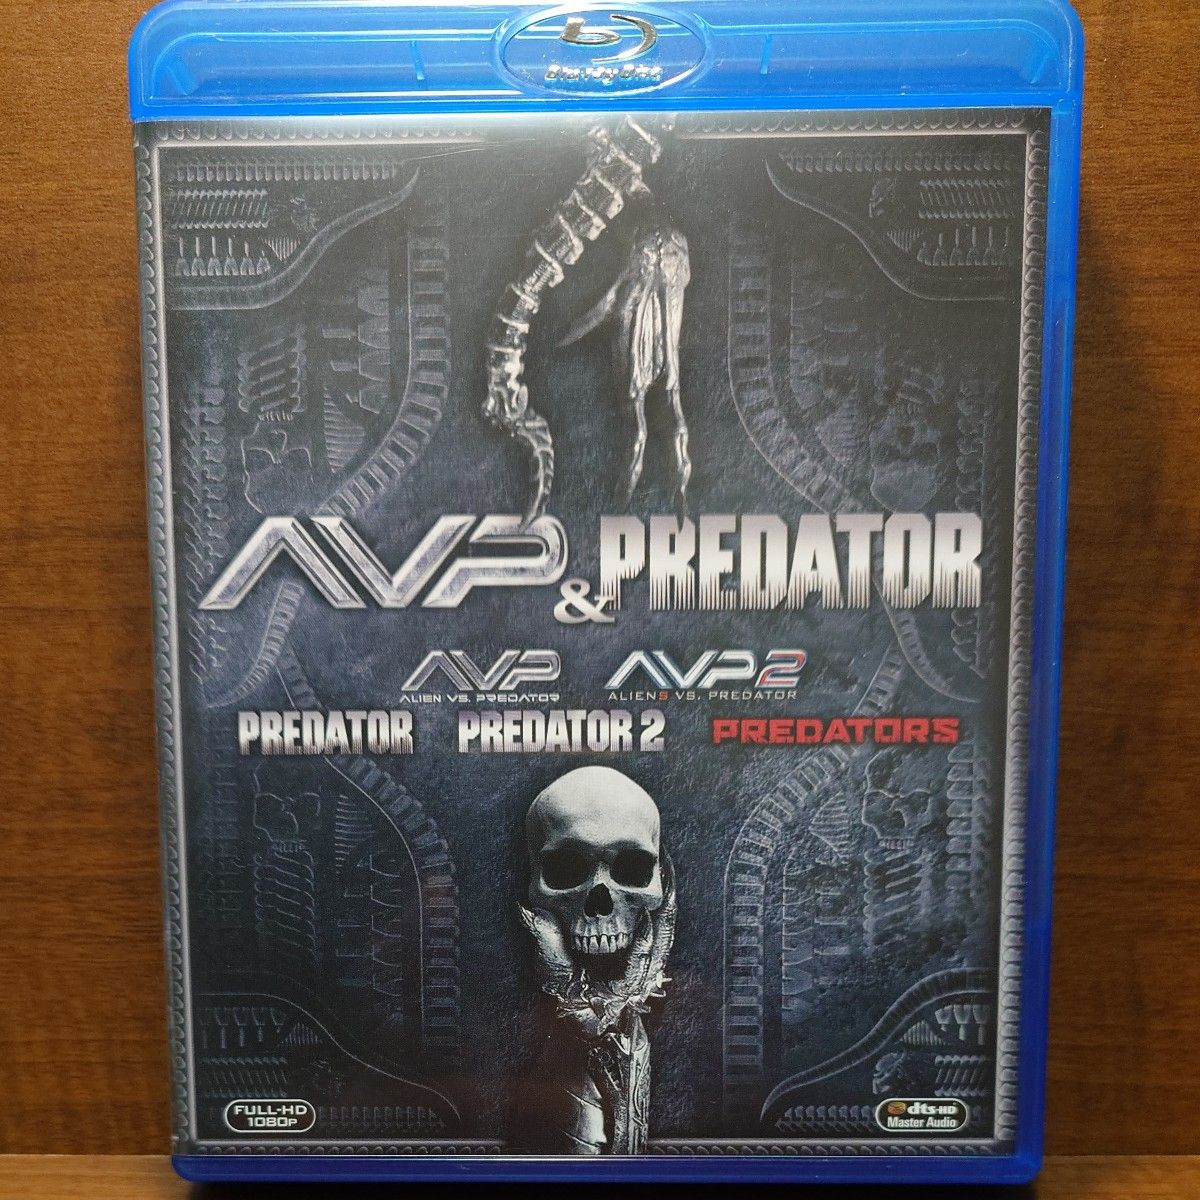 AVP&プレデター ブルーレイBOX (5枚組)  Blu-ray ブルーレイ